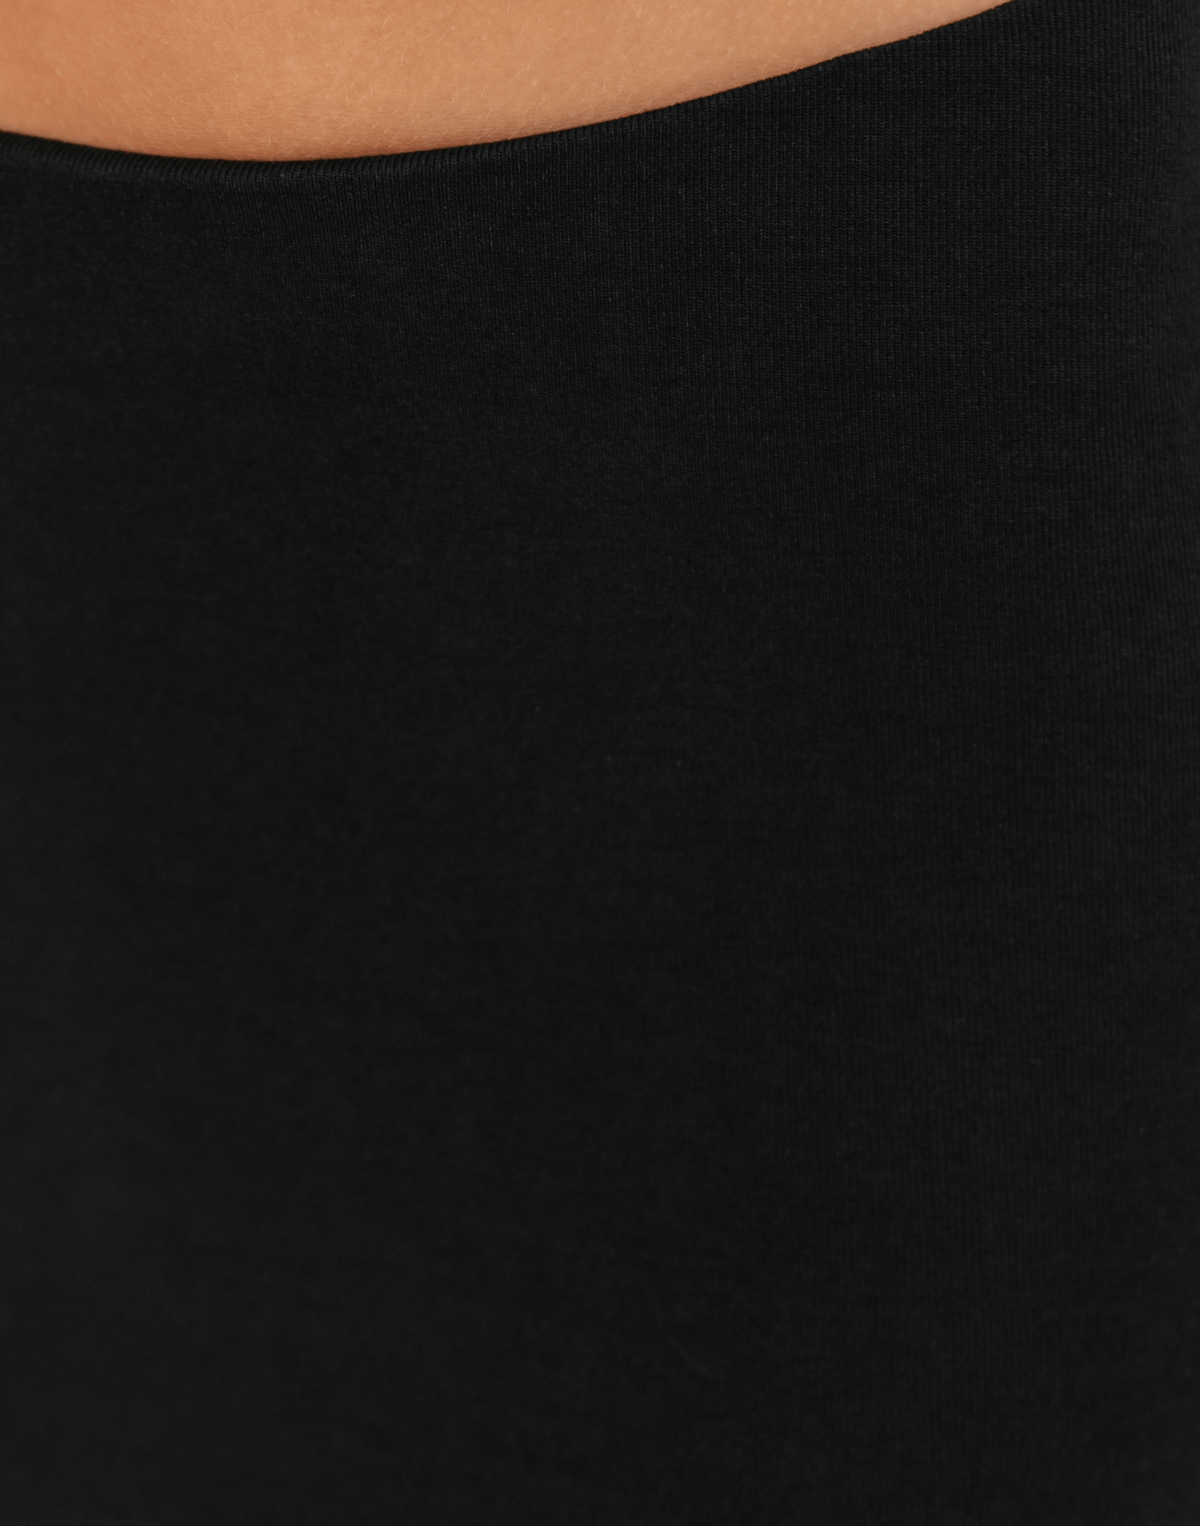 Press Pause Mini Skirt (Black) - Mid Waisted Mini Skirt - Women's Skirt - Charcoal Clothing